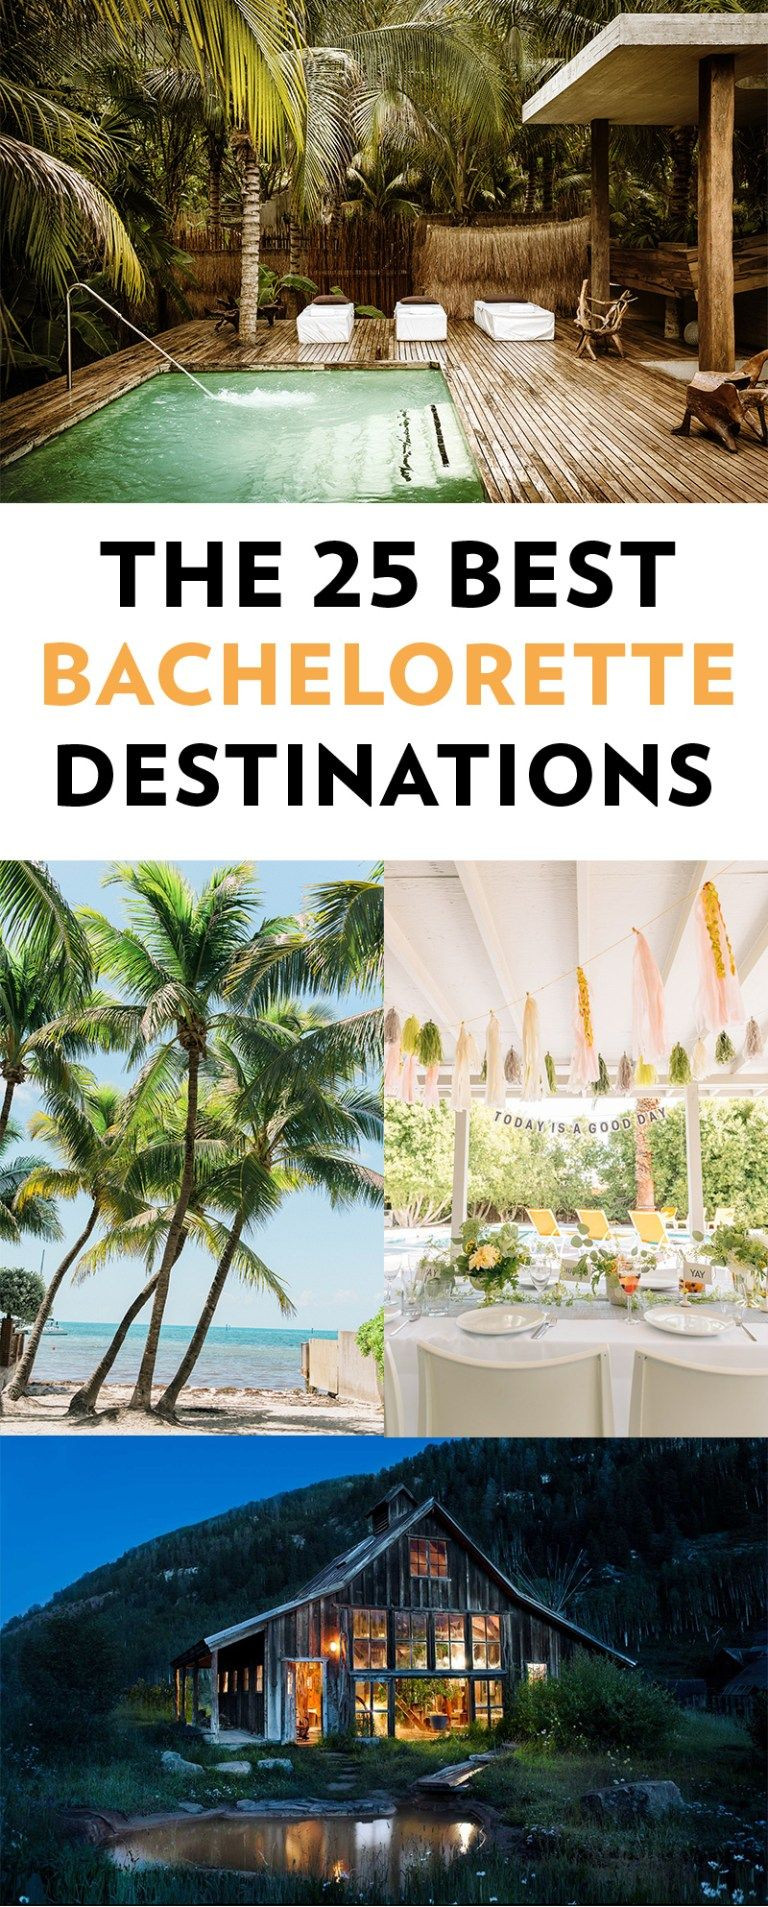 Destination Bachelorette Party Ideas Winery And Beach
 The 25 Best Bachelorette Destinations